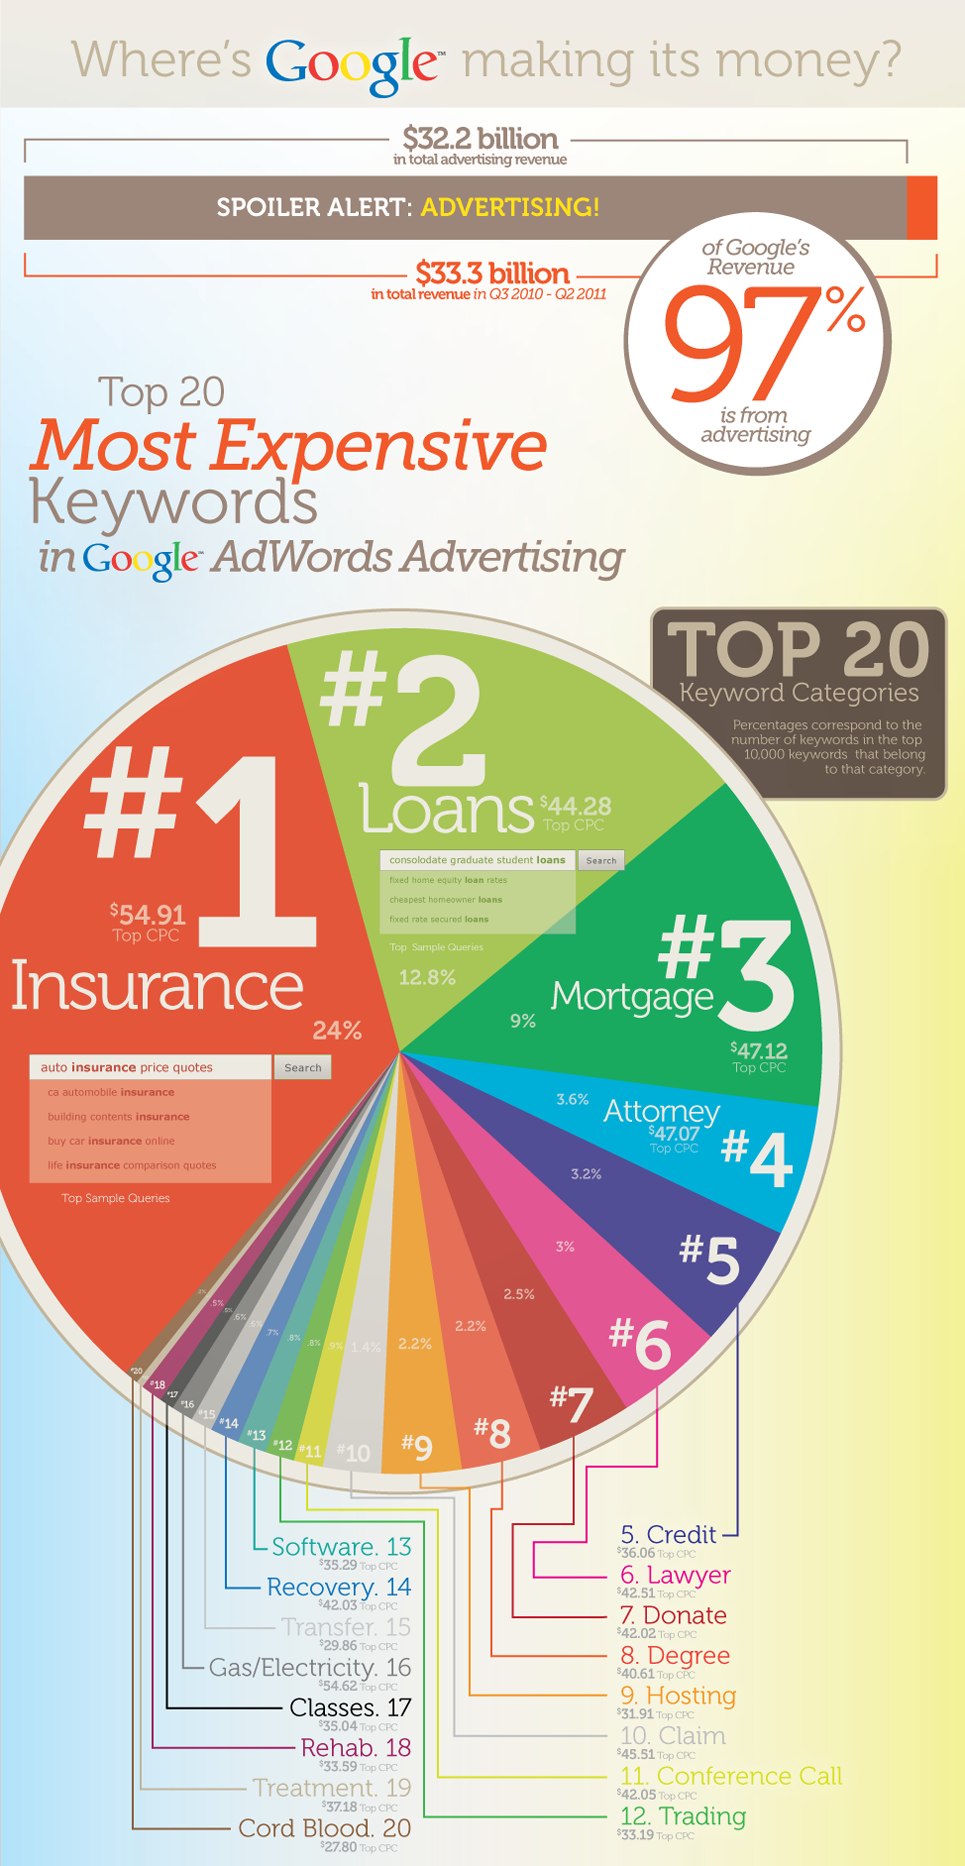 Top 20 Highest Cost Per Click Keywords Infographic